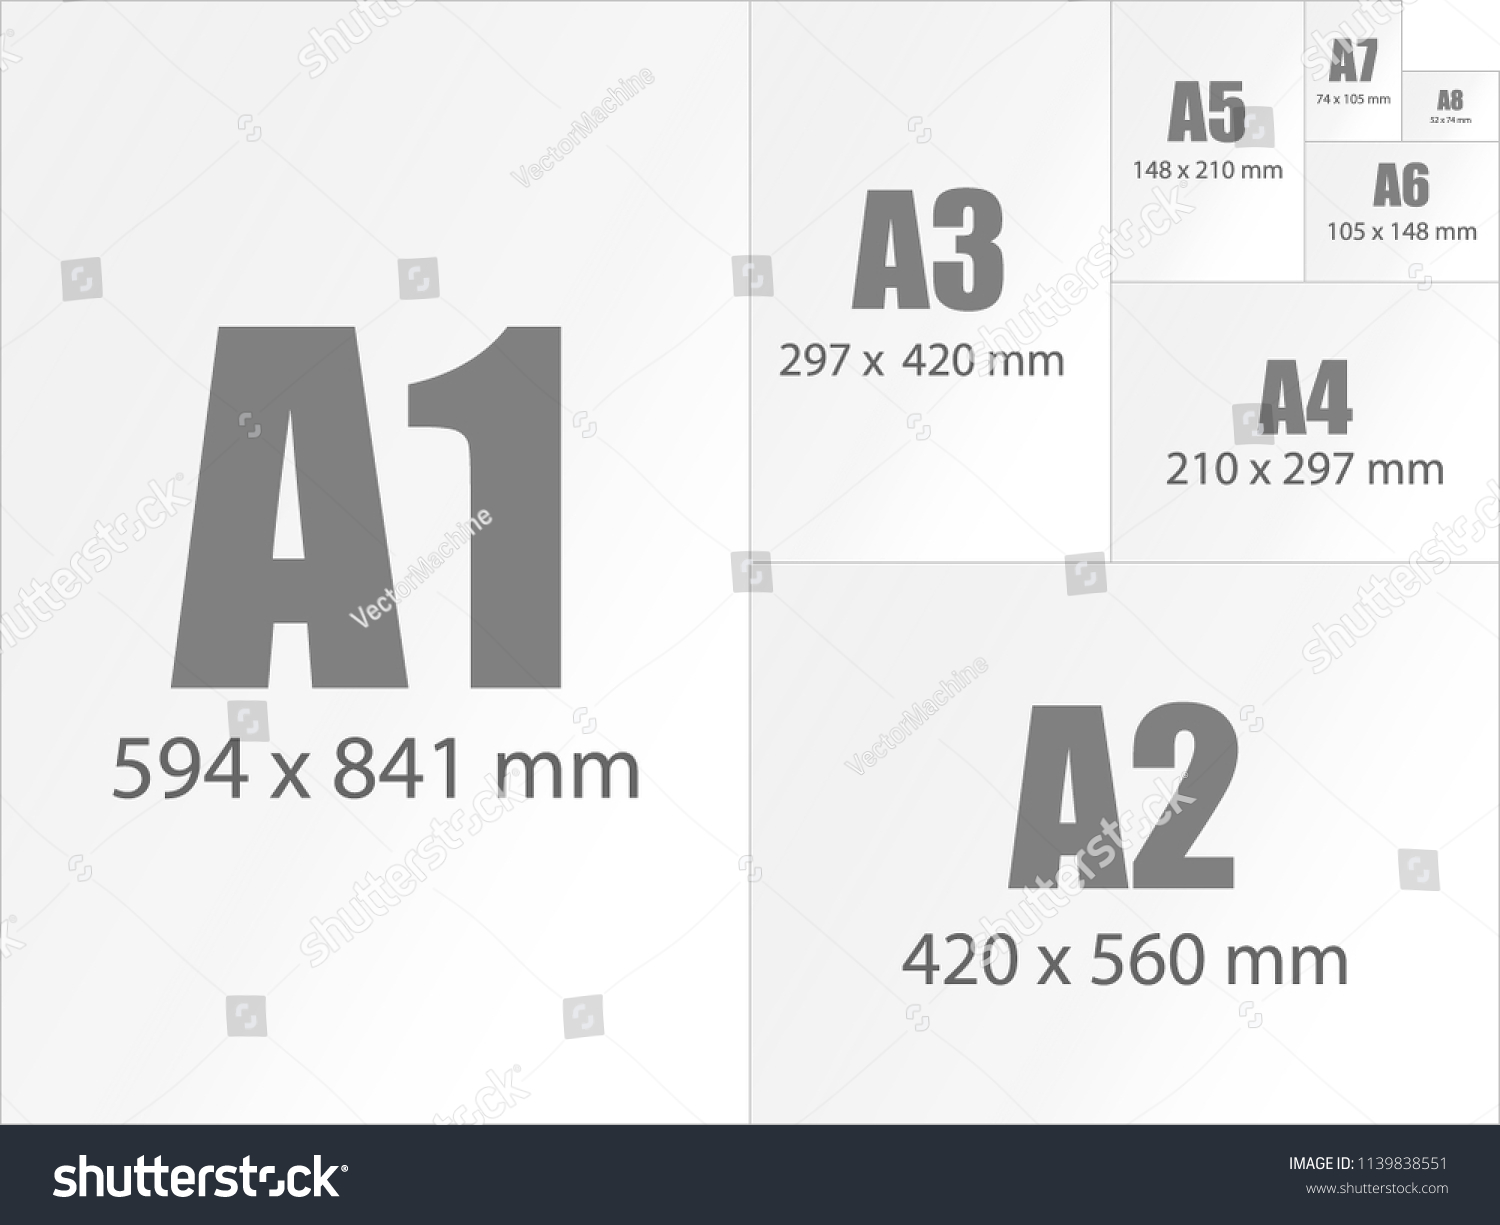 A3 A4 A5 A6 A7 A8 A9 Images Stock Photos Vectors Shutterstock